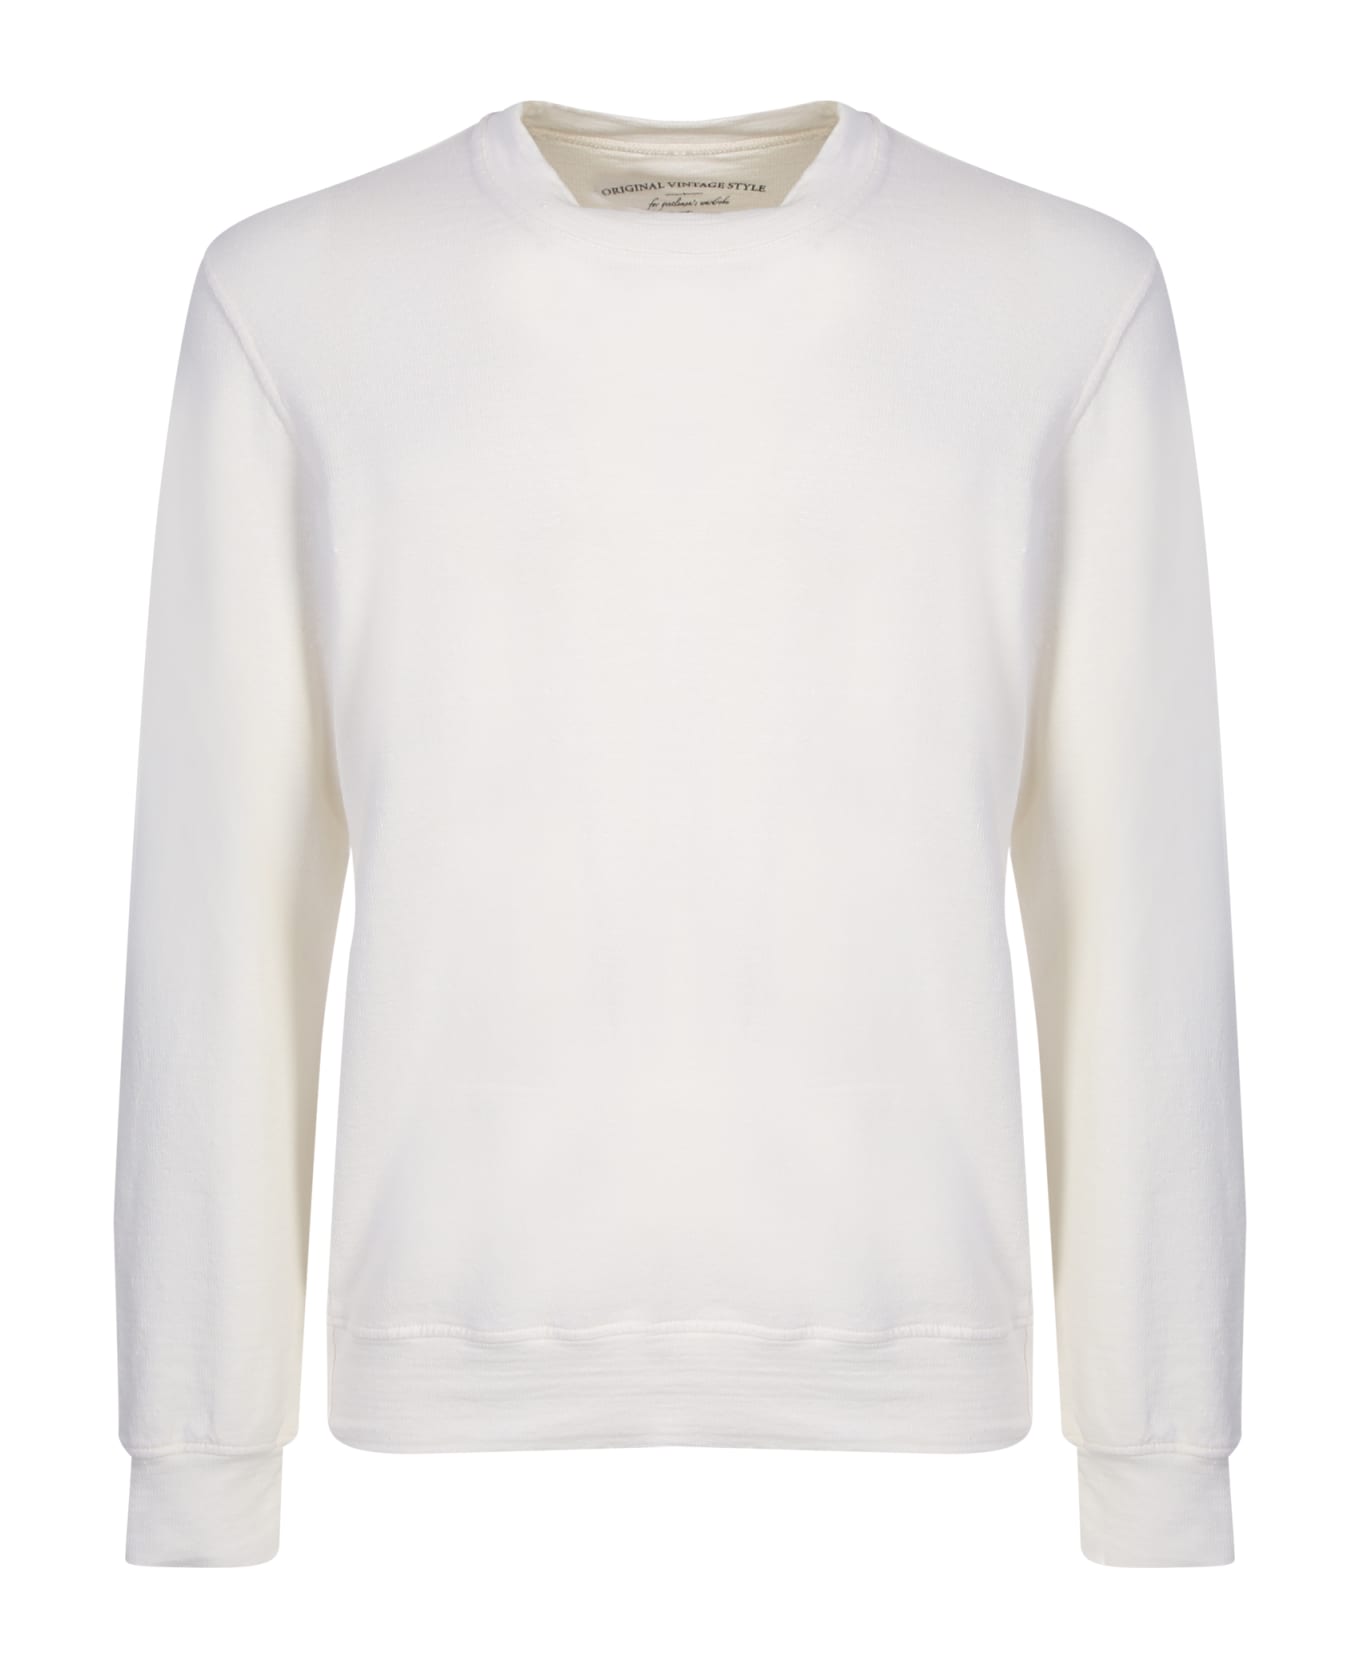 Original Vintage Style White Linen Sweatshirt - White フリース